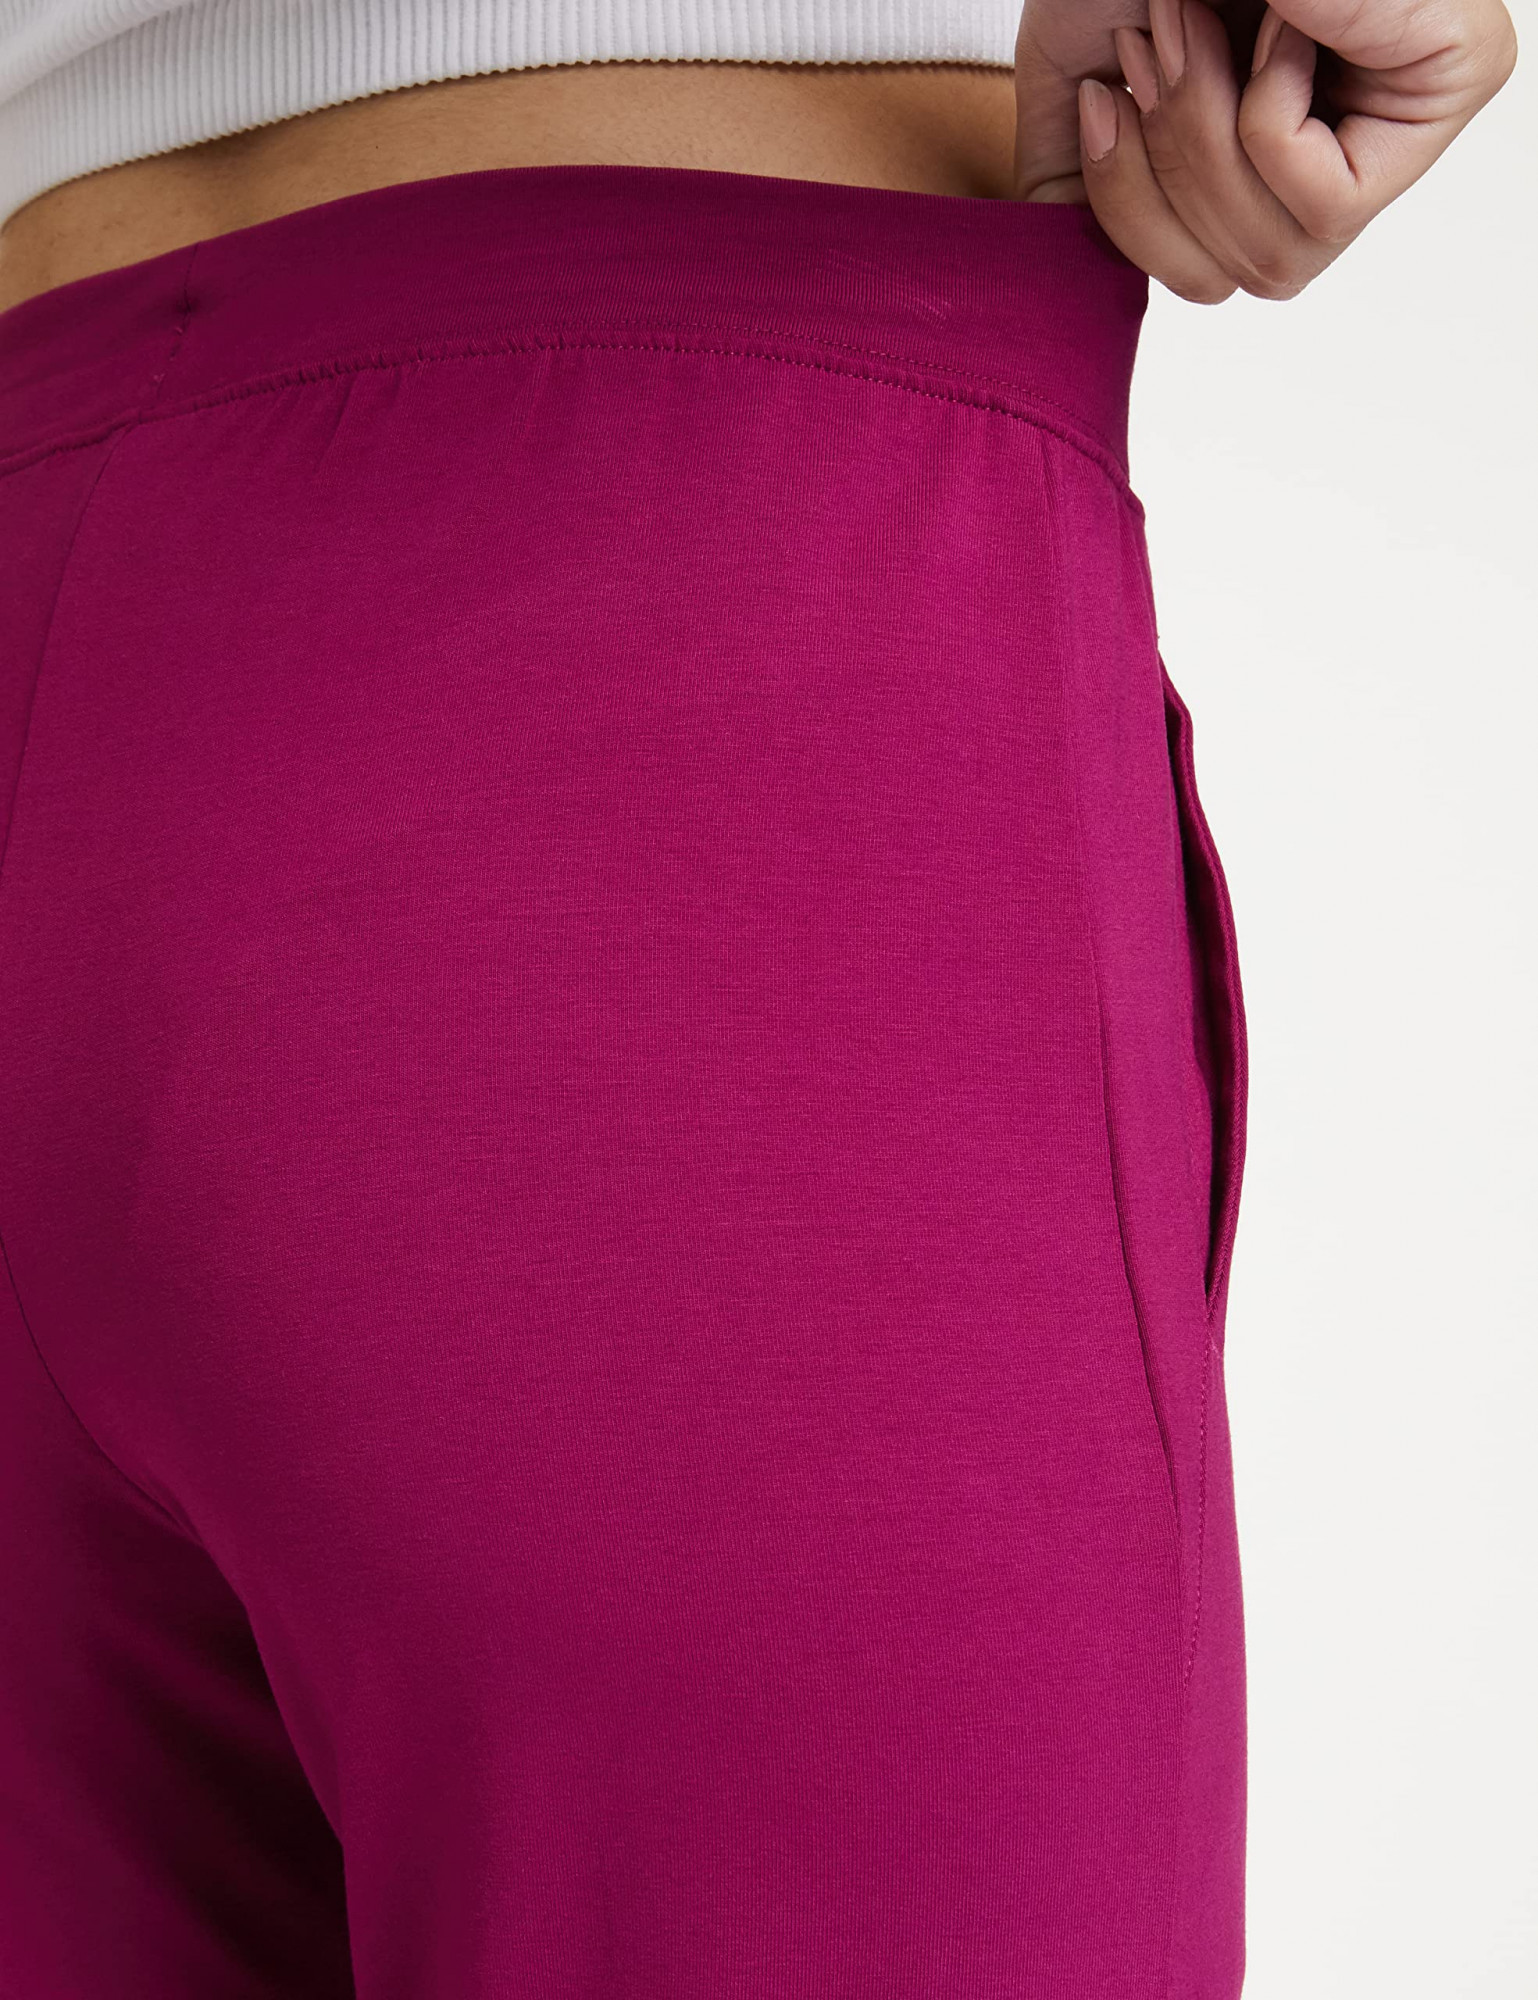 Van Heusen Women Relaxed Fit Lounge Pants - Cotton Elastane - Smart Tech+,  Easy Stain Release, Moisture Wicking